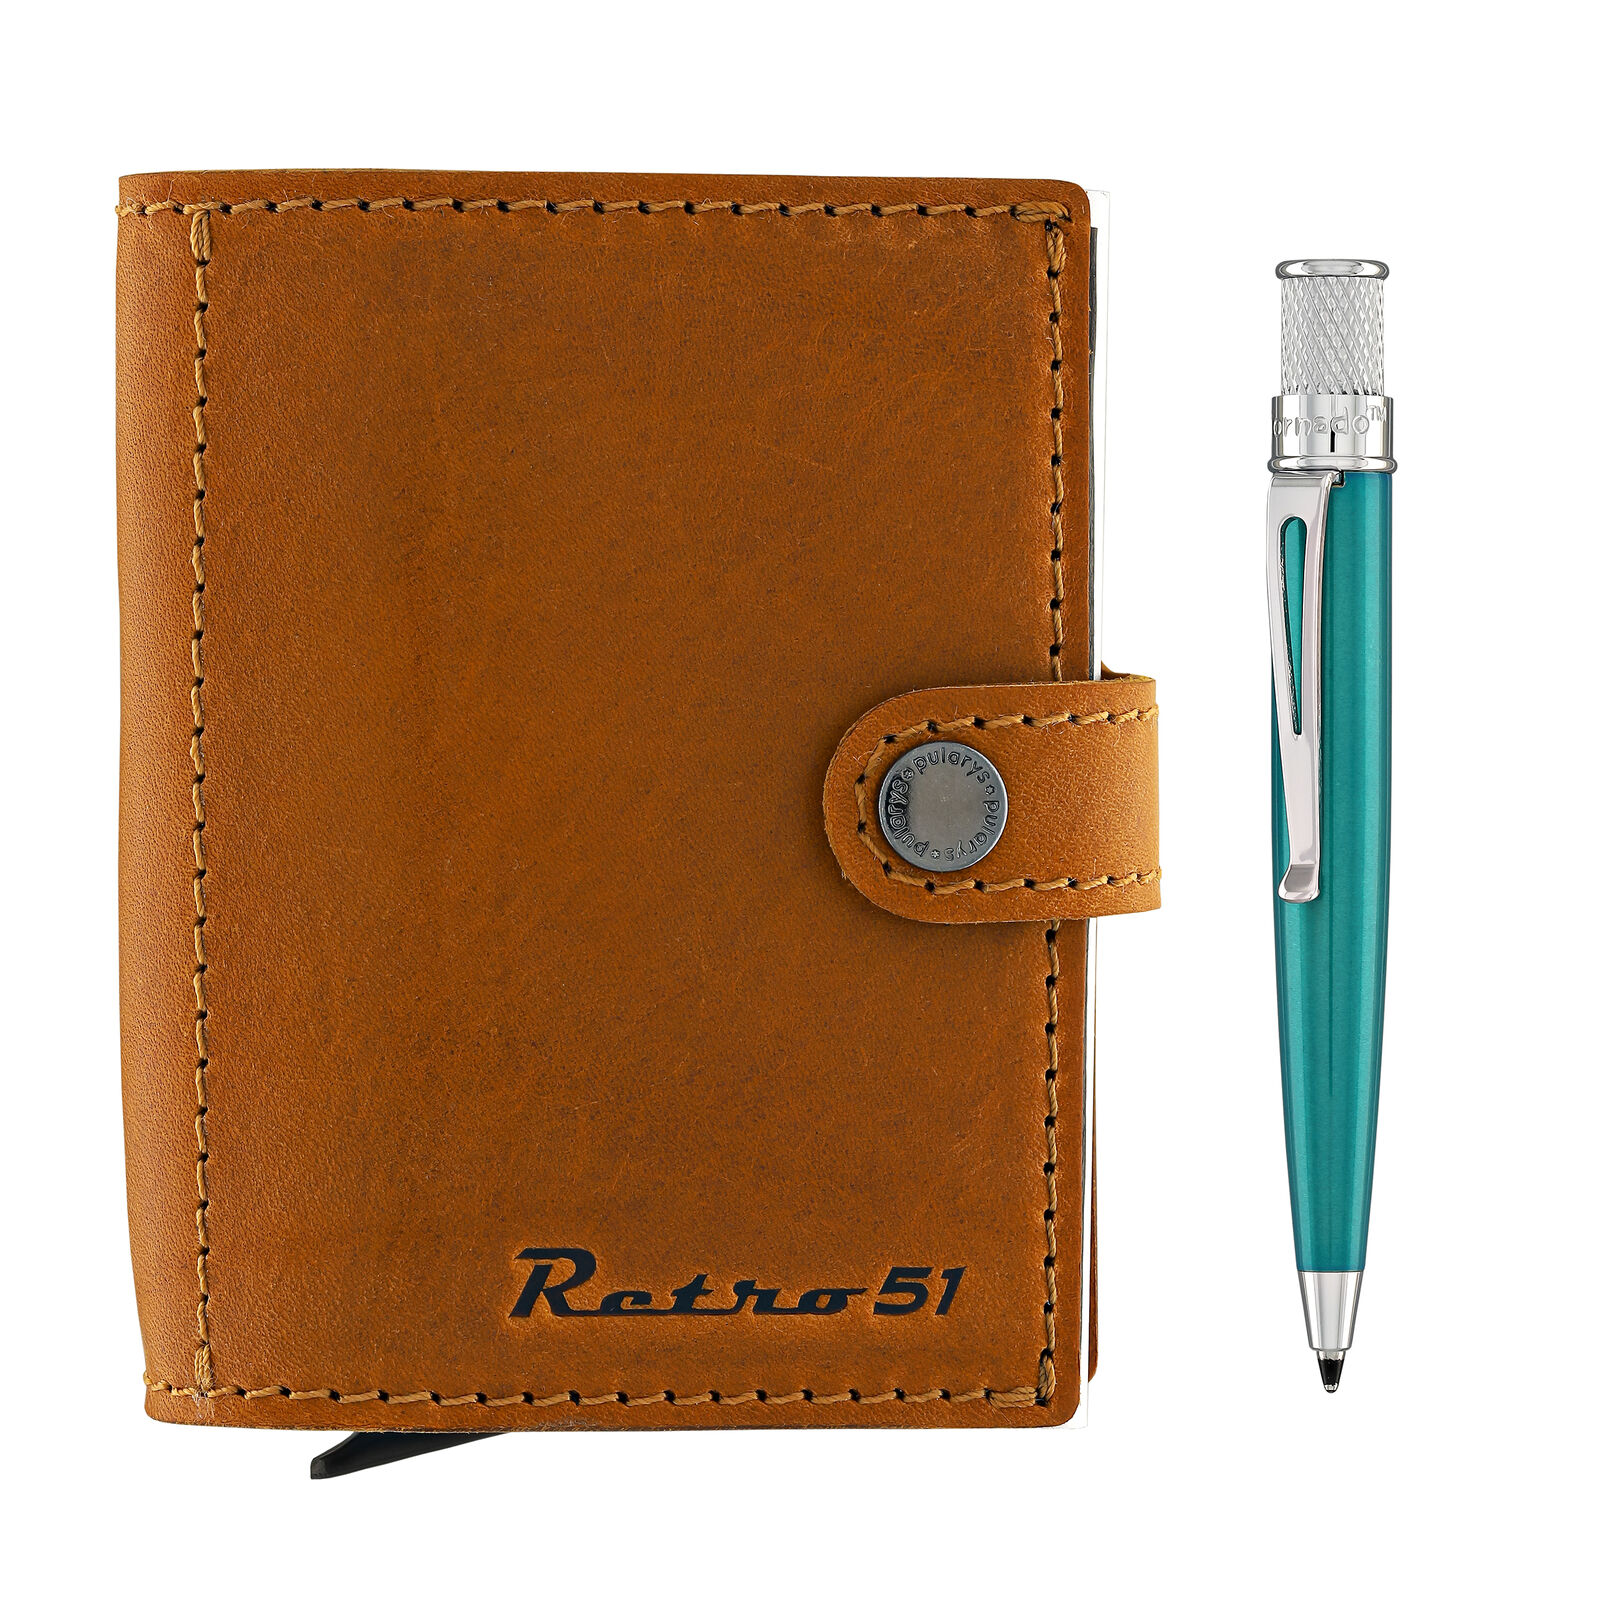 Retro 51 Polarys Modern Traveler Set Cognac Leather w/ Turquoise Ballpoint Pen